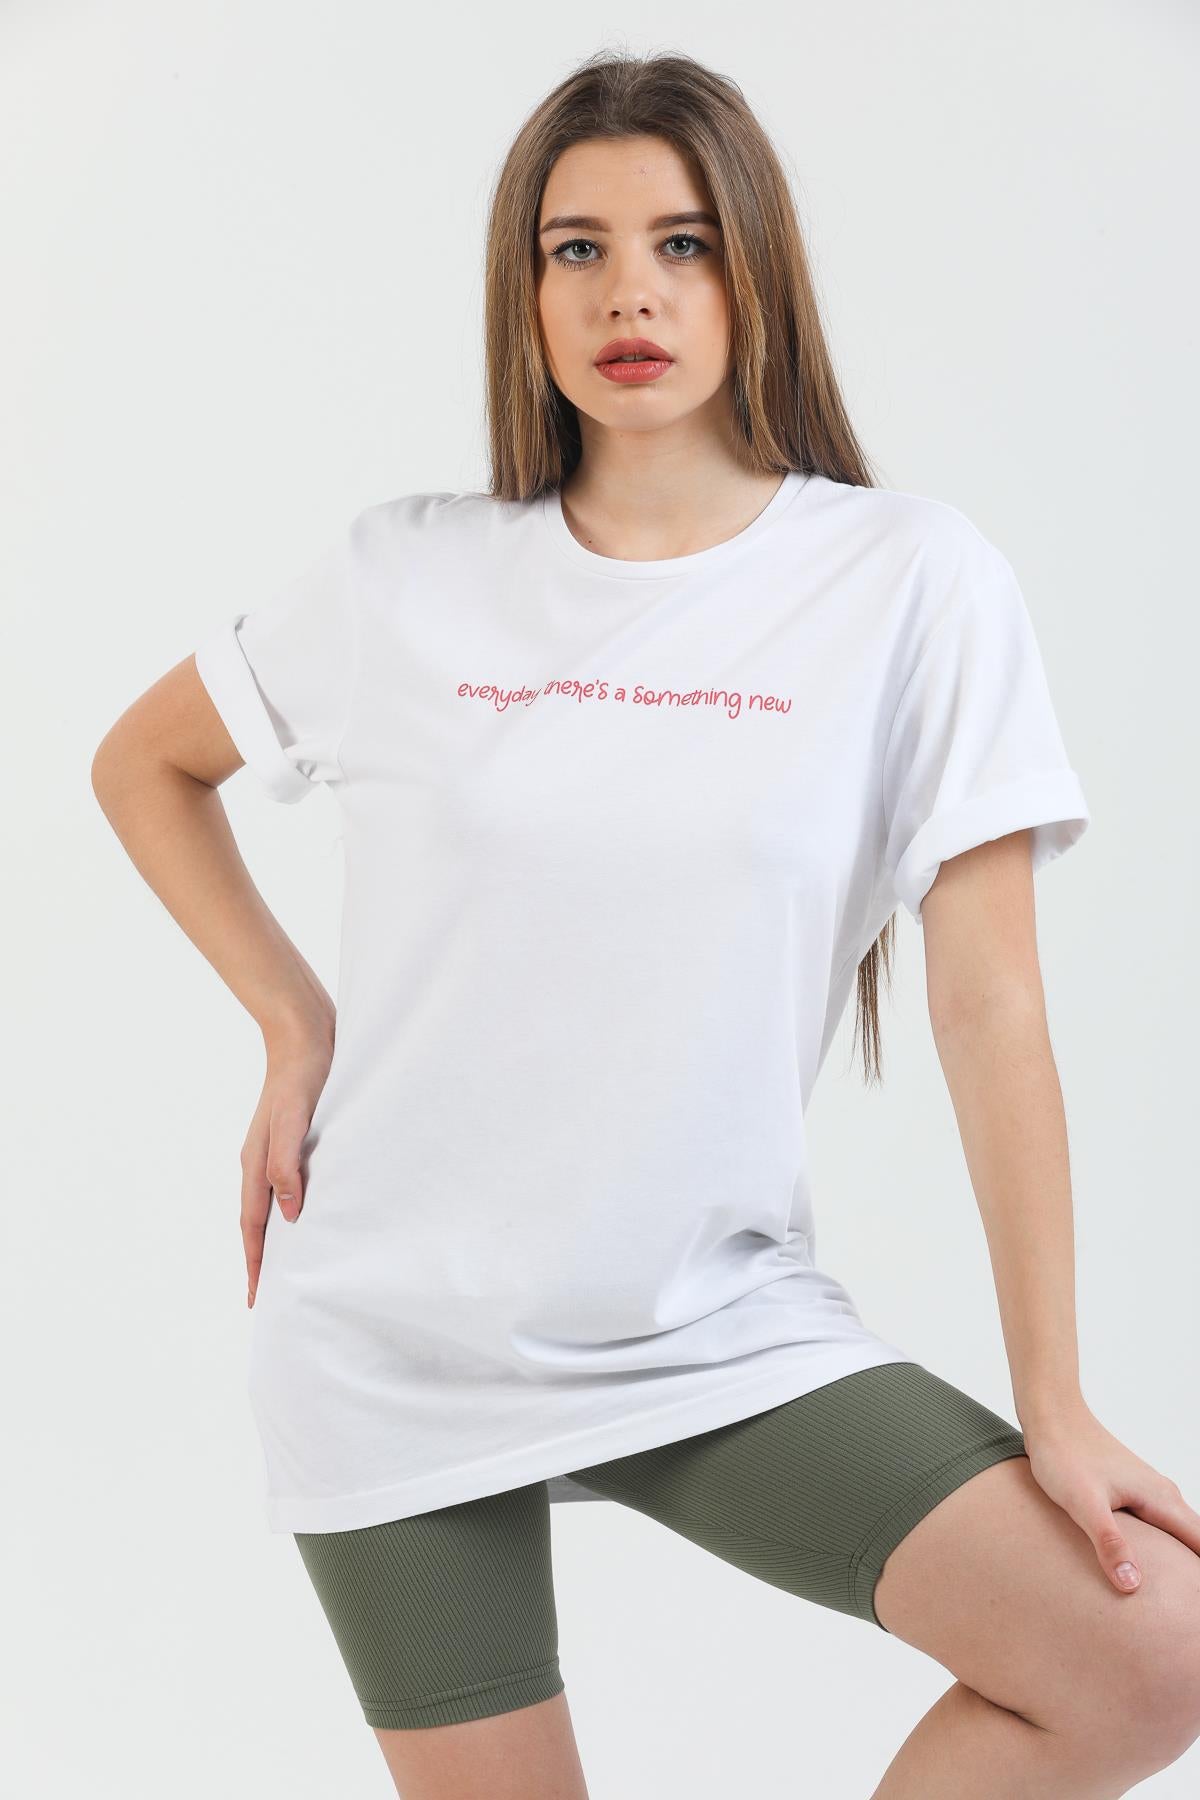 Something New Printed Cotton Crew Neck Oversize female T -shirt.